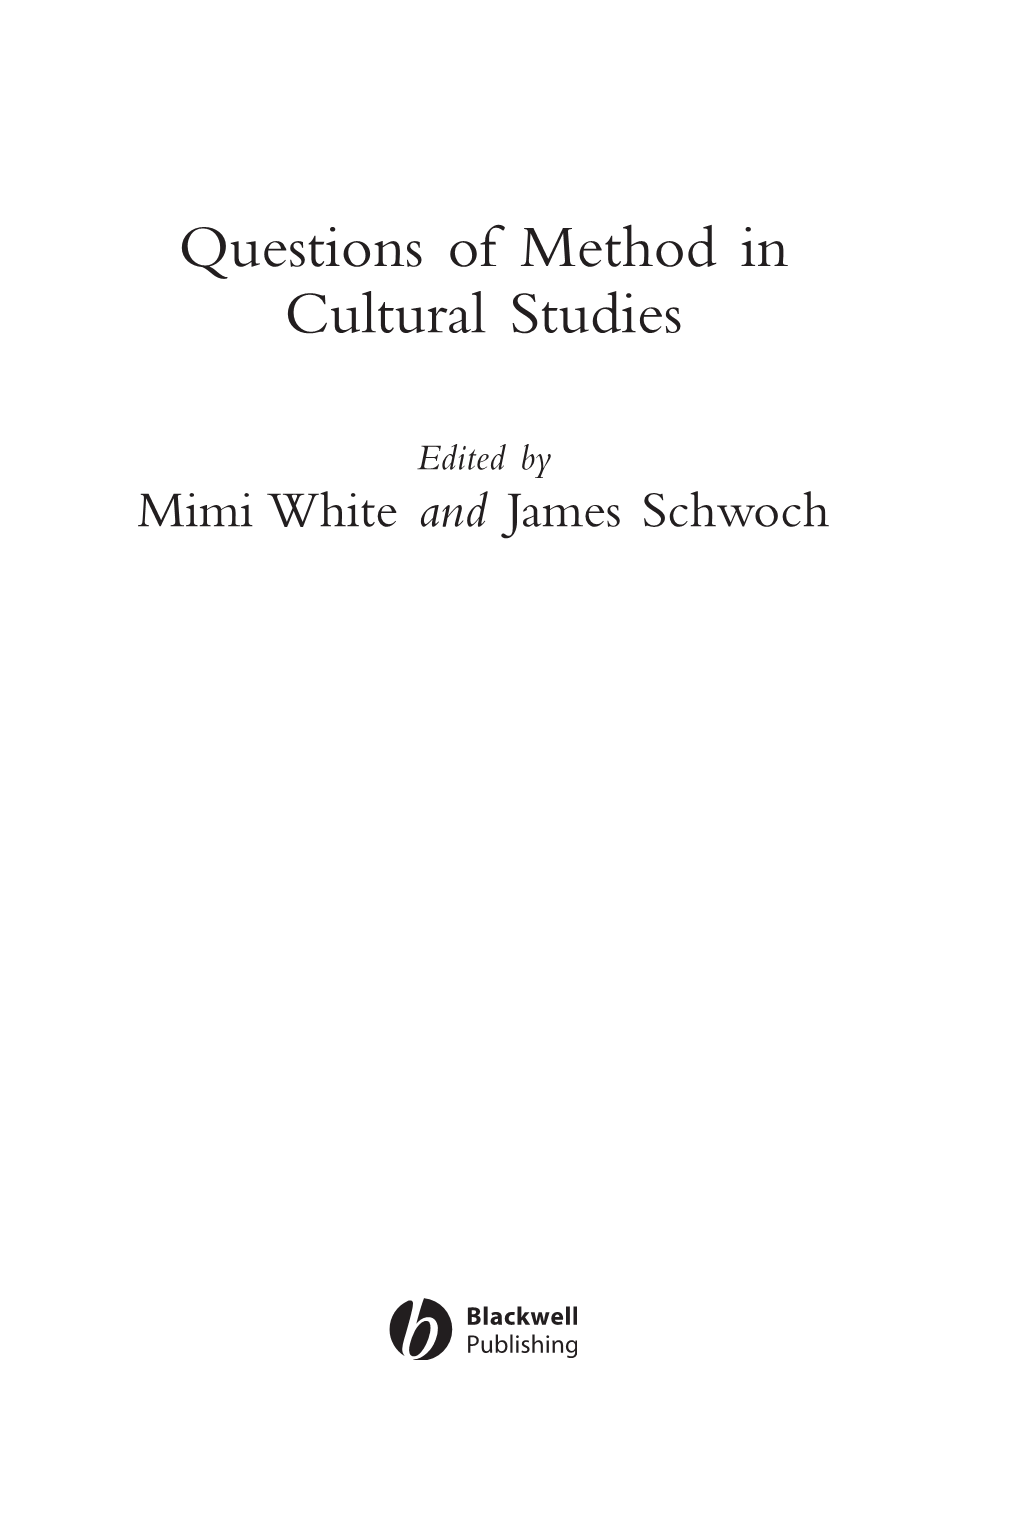 Questions of Method in Cultural Studies